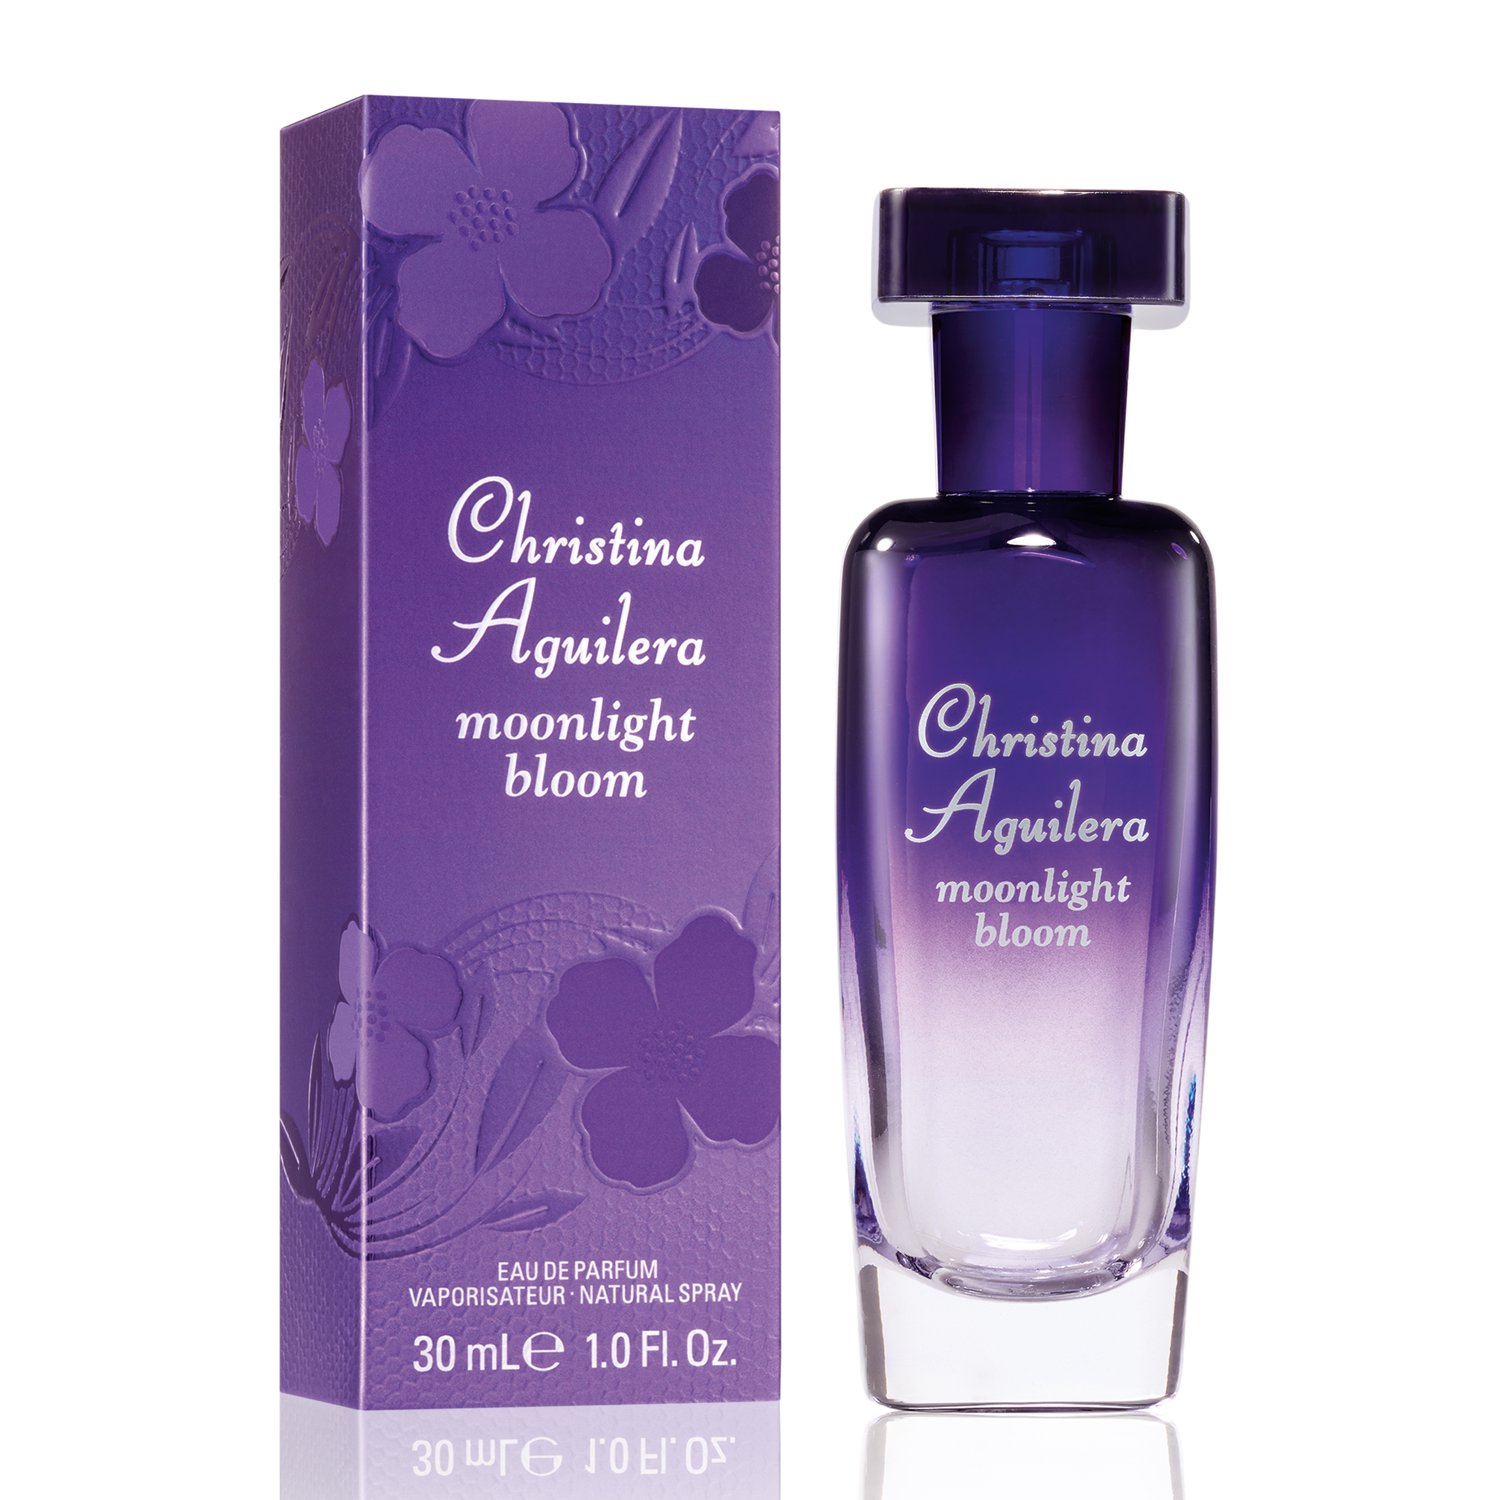 Christina Aguilera Moonlight Bloom Eau De Parfum, Perfume for Women, 1 Oz - image 3 of 7